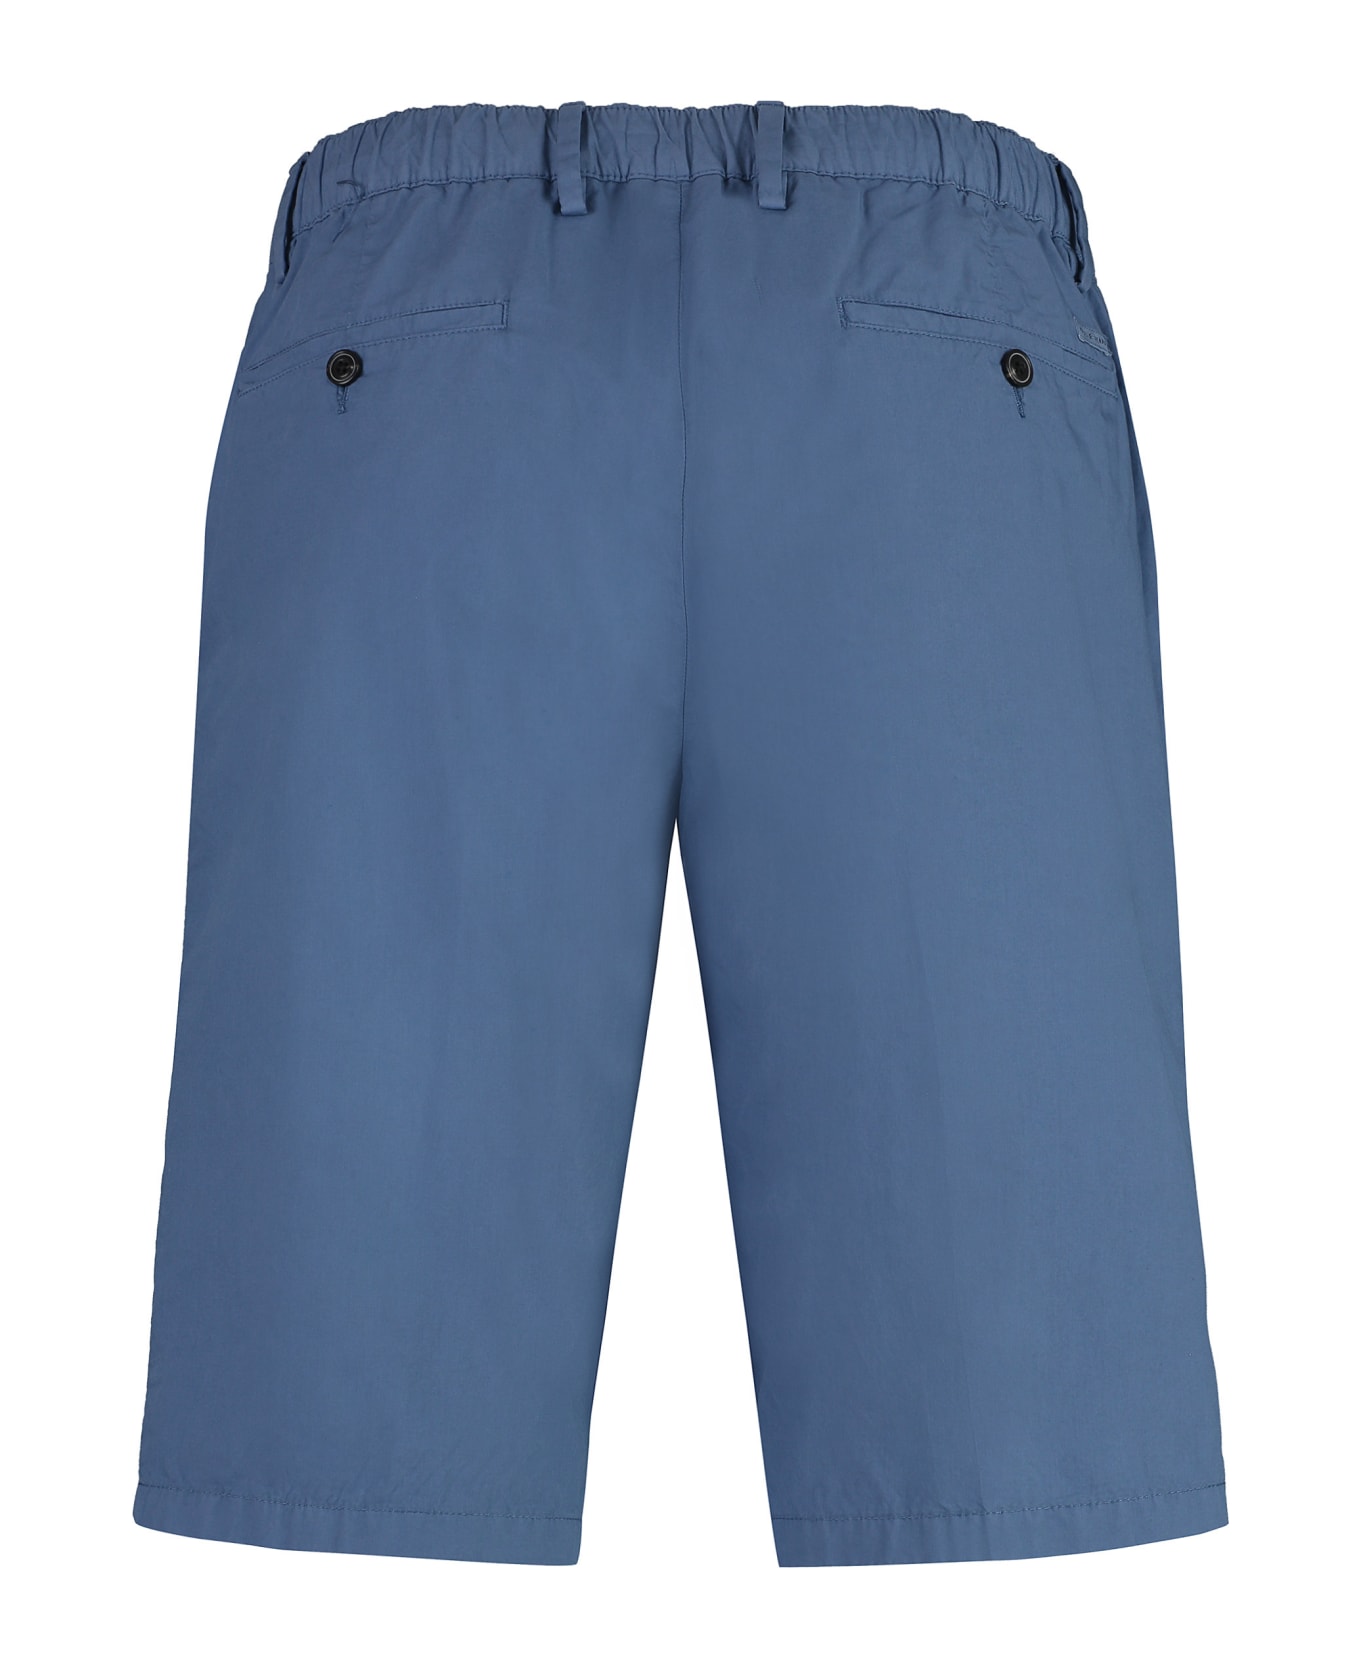 Paul&Shark Cotton Bermuda Shorts - Light Blue